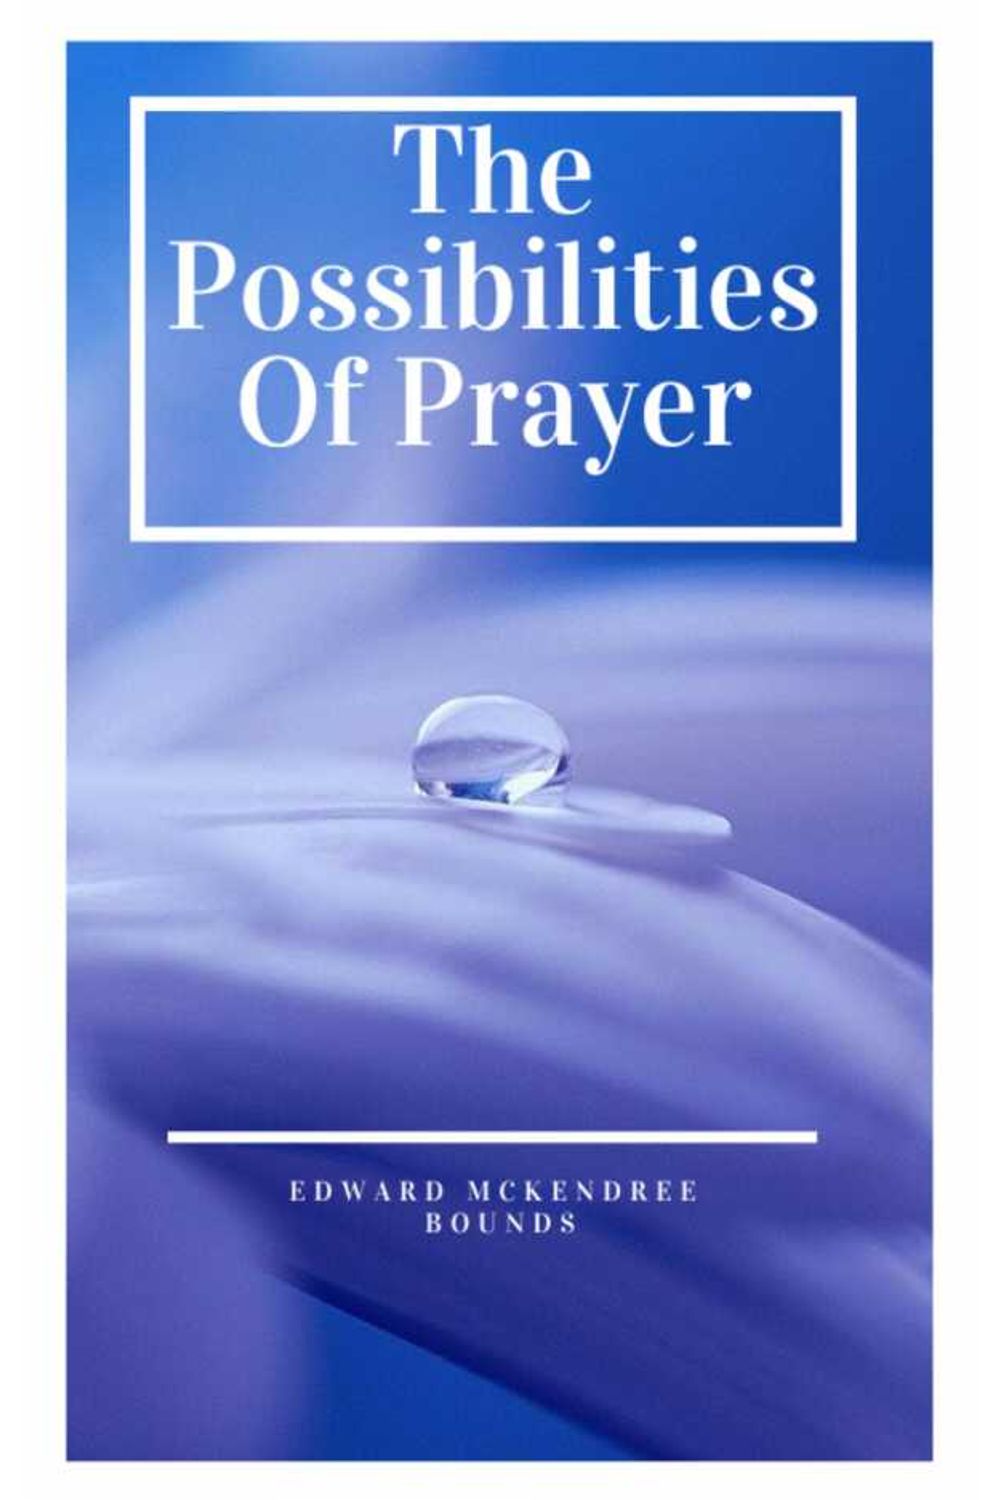 bw-the-possibilities-of-prayer-darolt-books-9786586145328